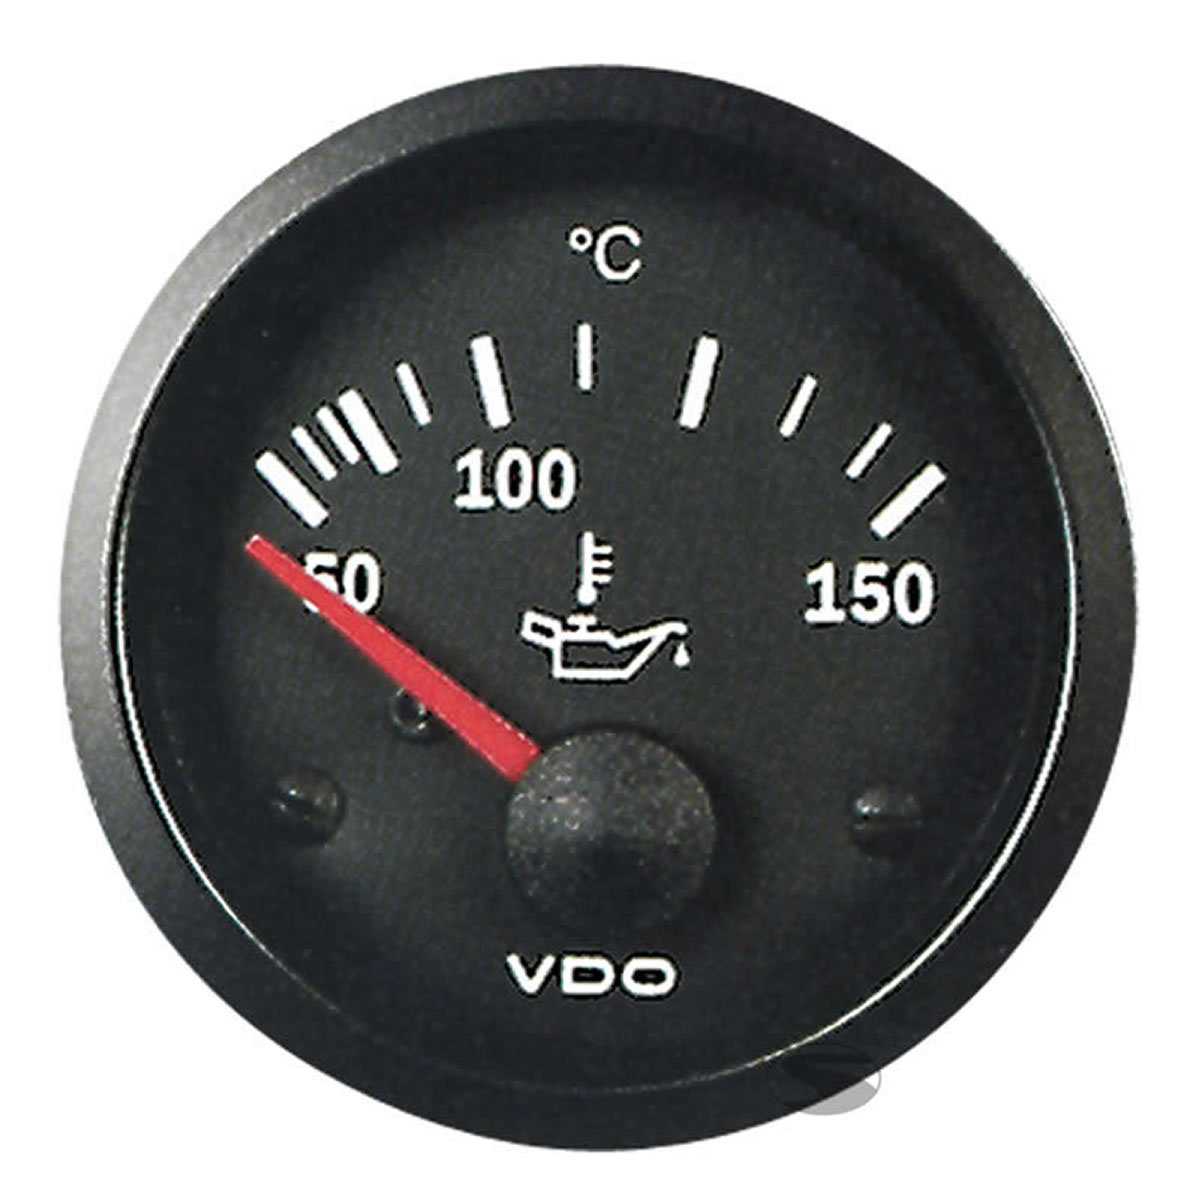 VDO Cockpit Vision Engine oil temperature Gauges 150C